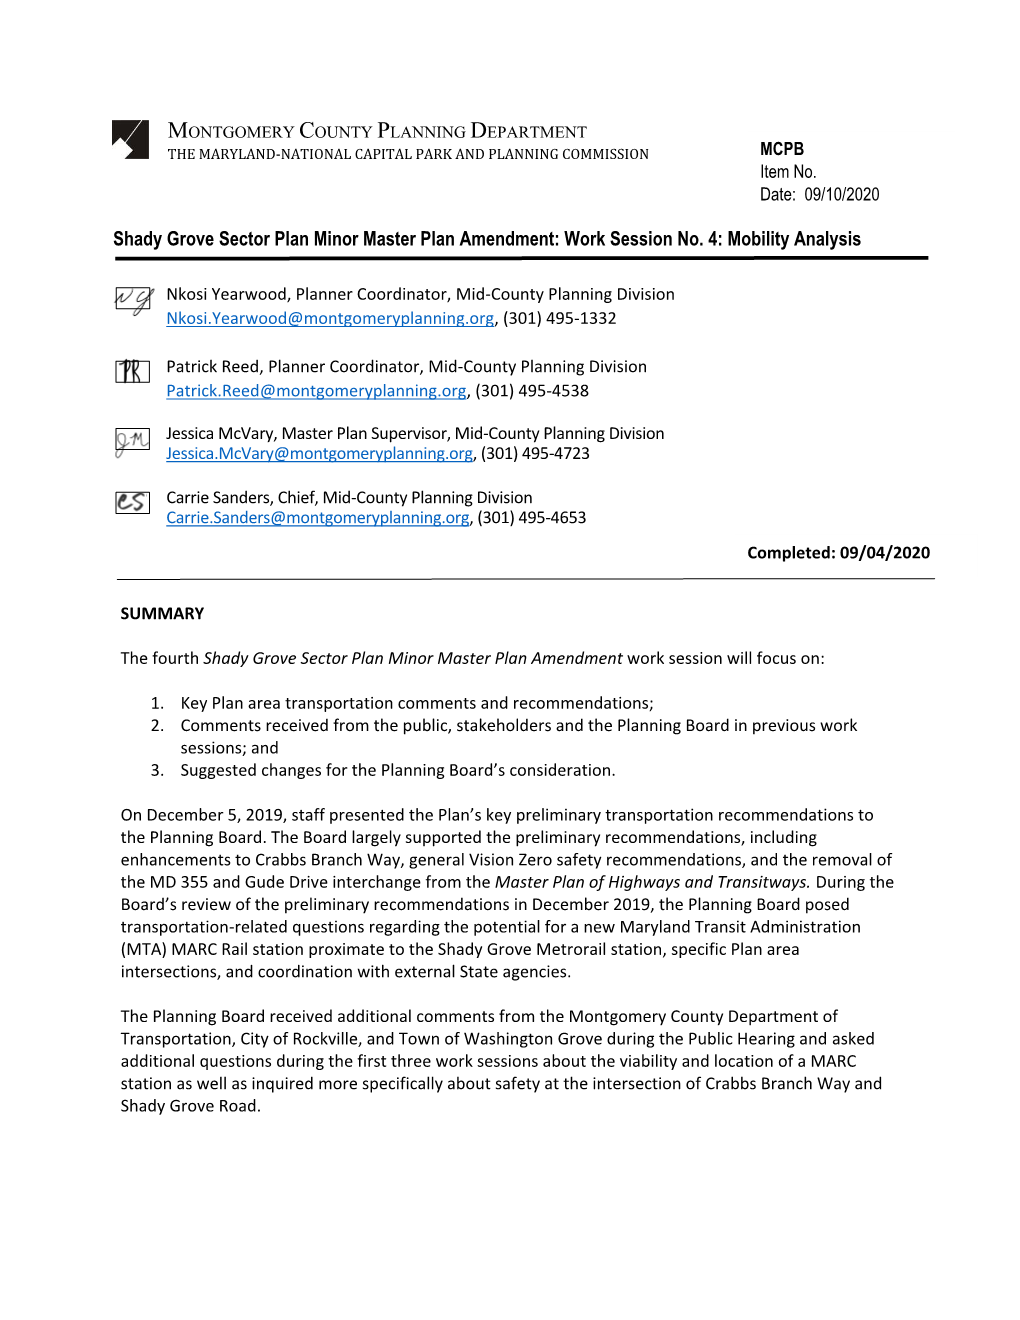 Shady Grove Sector Plan Minor Master Plan Amendment: Work Session No